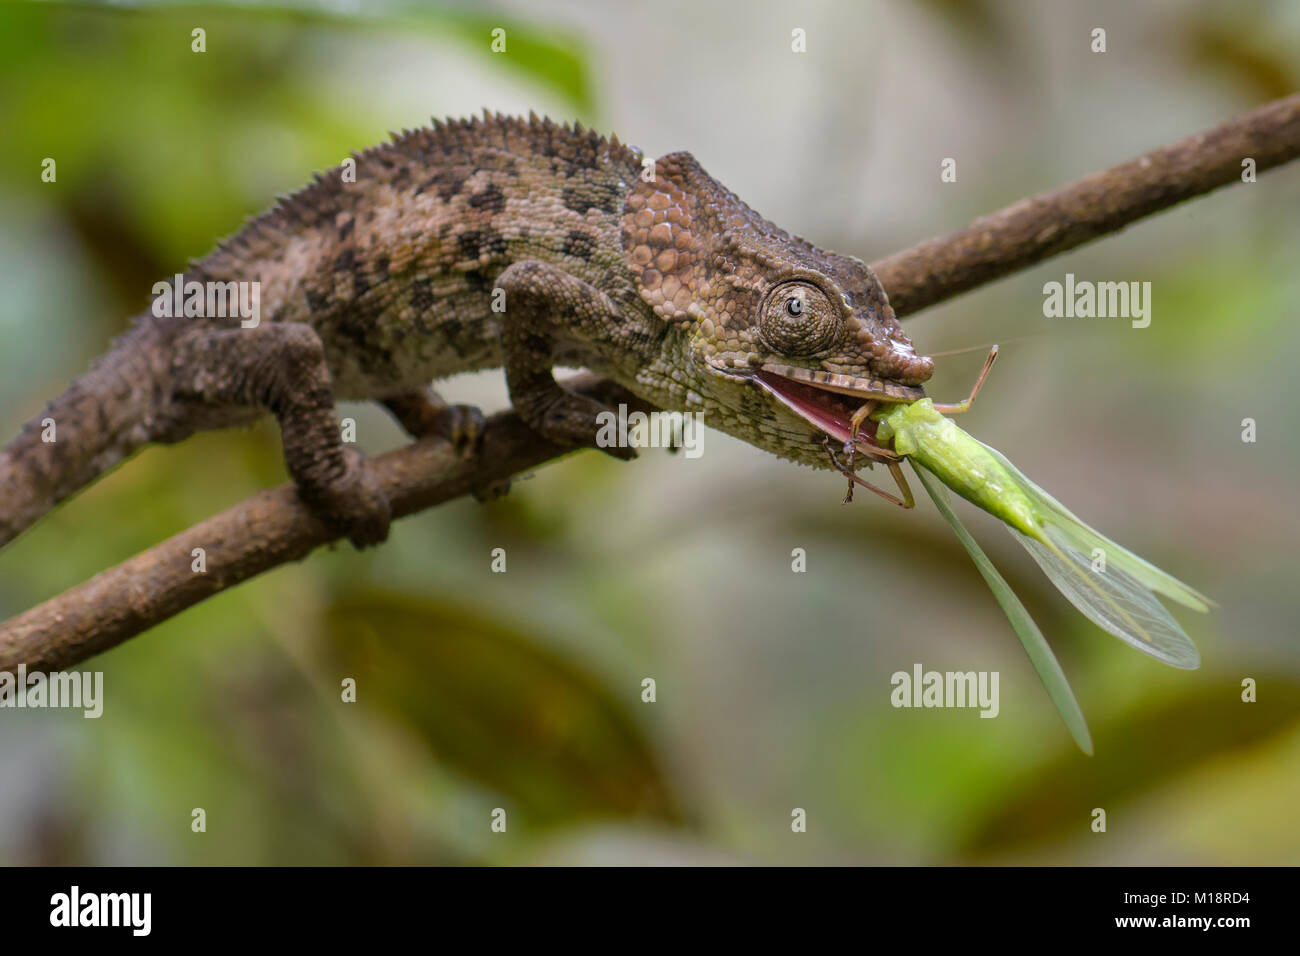 Kurze-horned Chameleon - Calumma brevicorne, Madagaskar Regenwald. Schöne farbige Eidechse. Elephant ear. Stockfoto